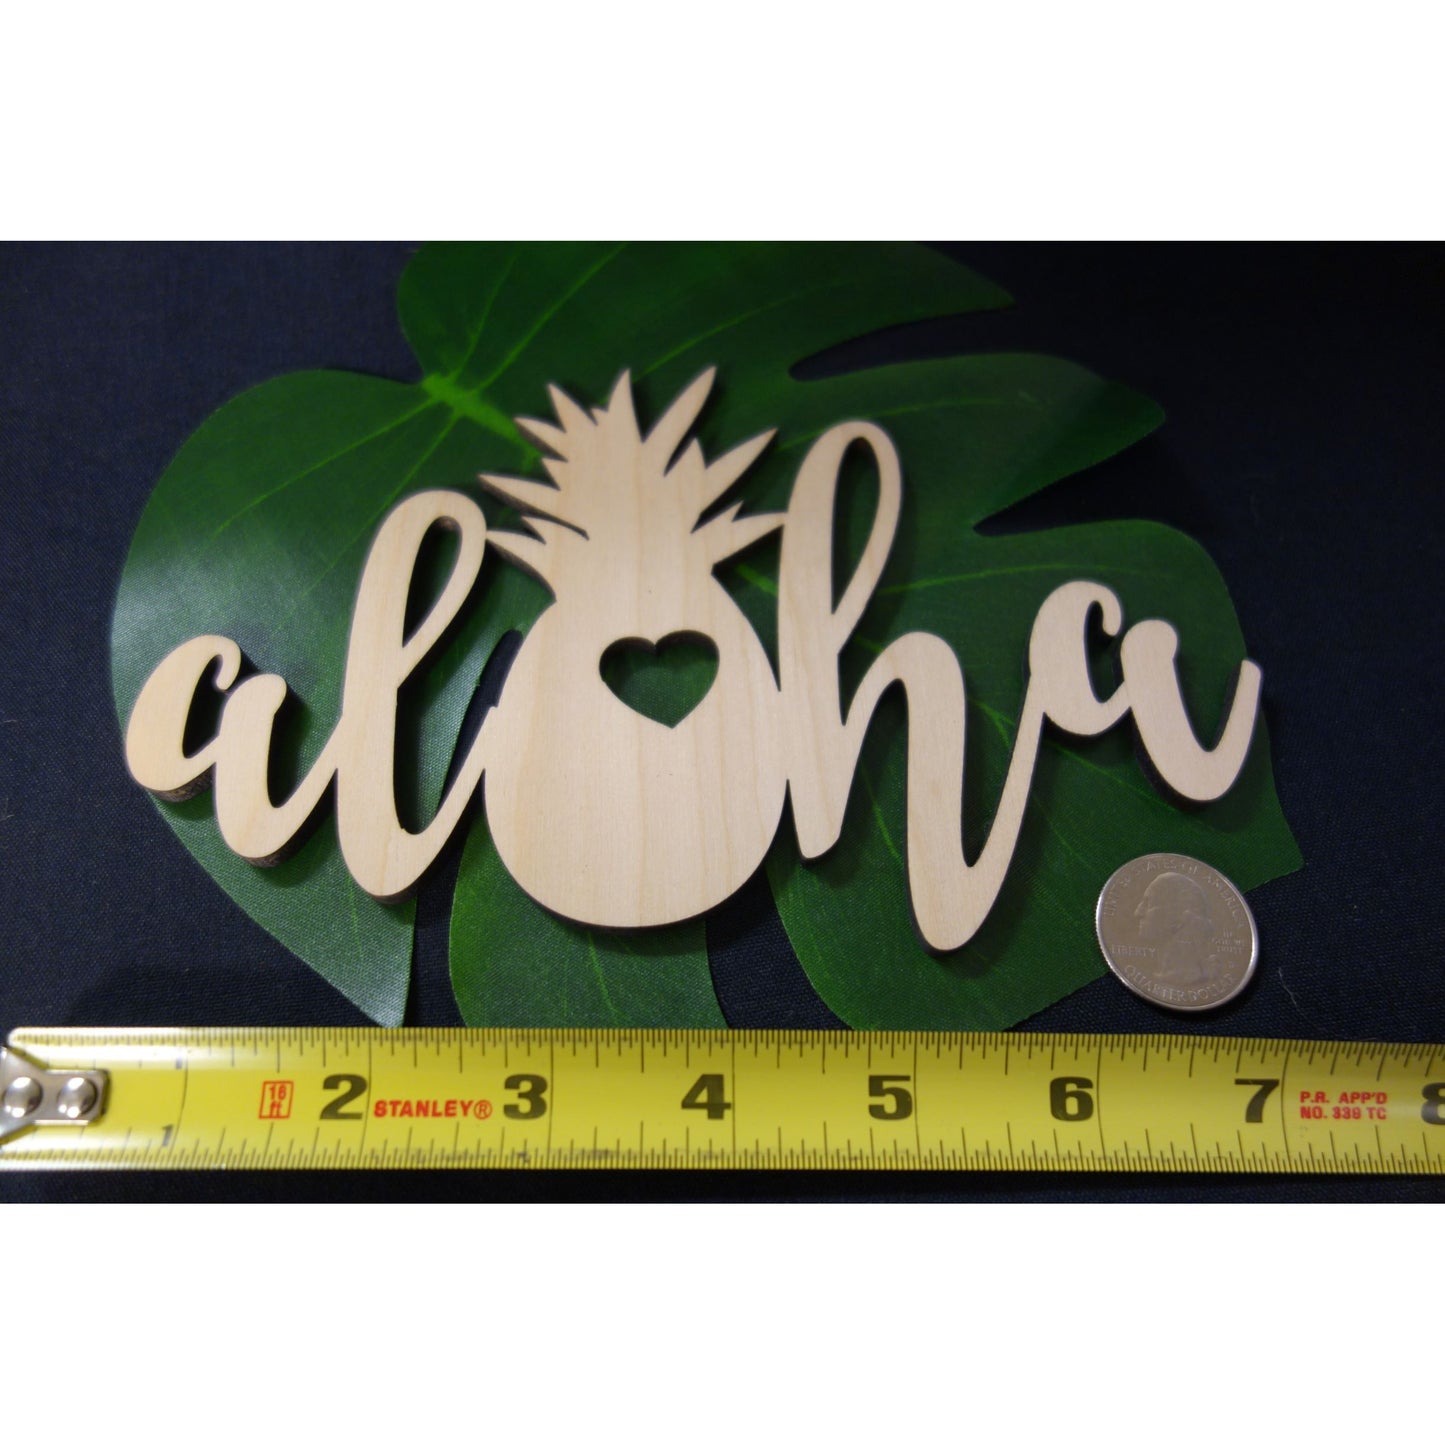 Aloha Pineapple Decorative Piece